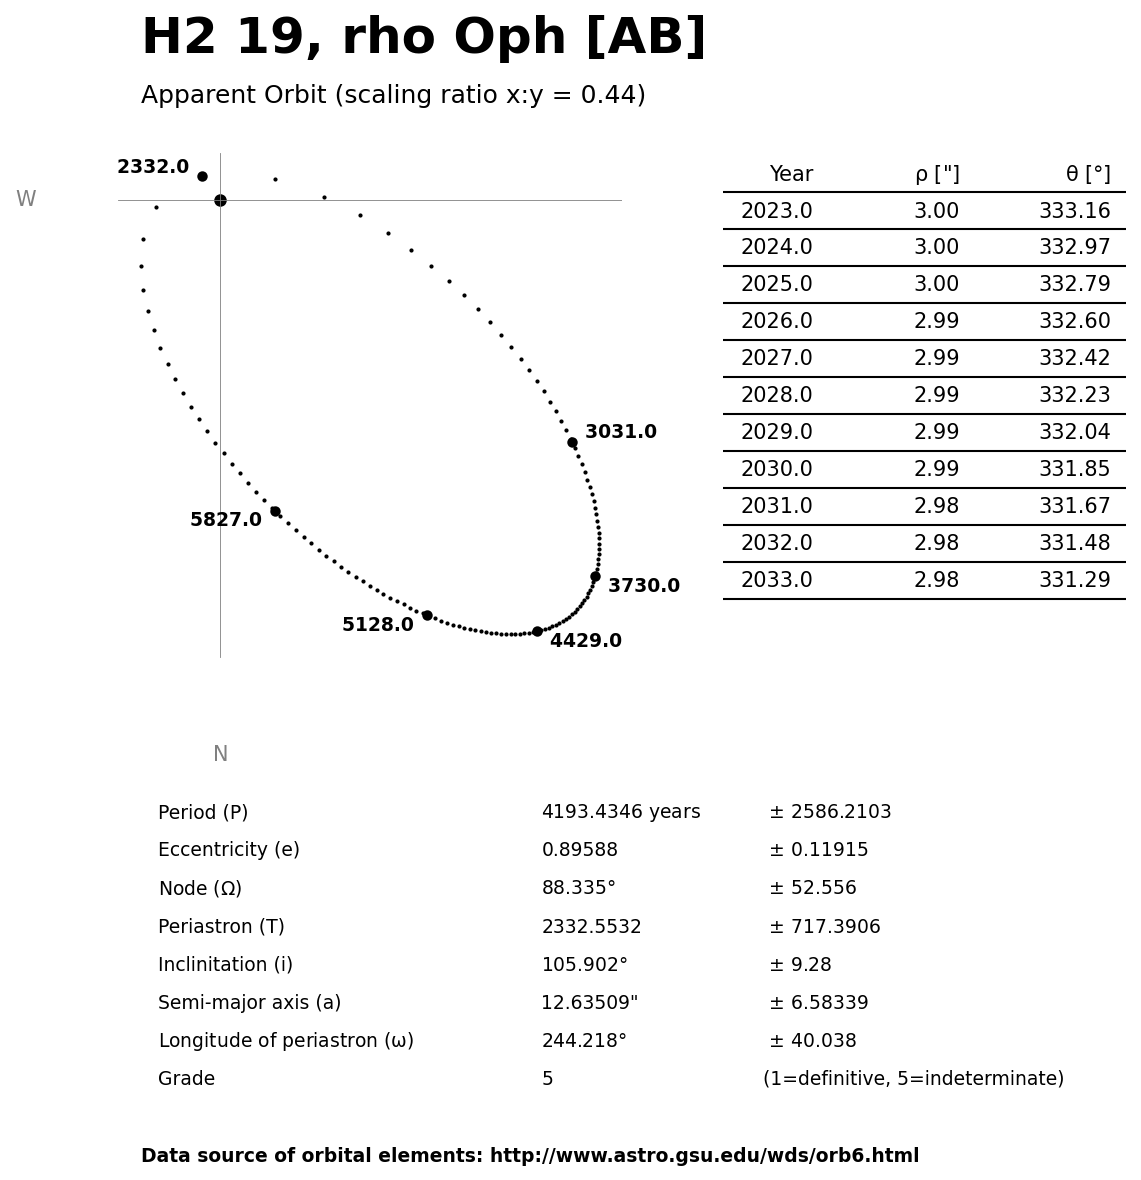 ../images/binary-star-orbits/H2-19-AB-orbit.jpg